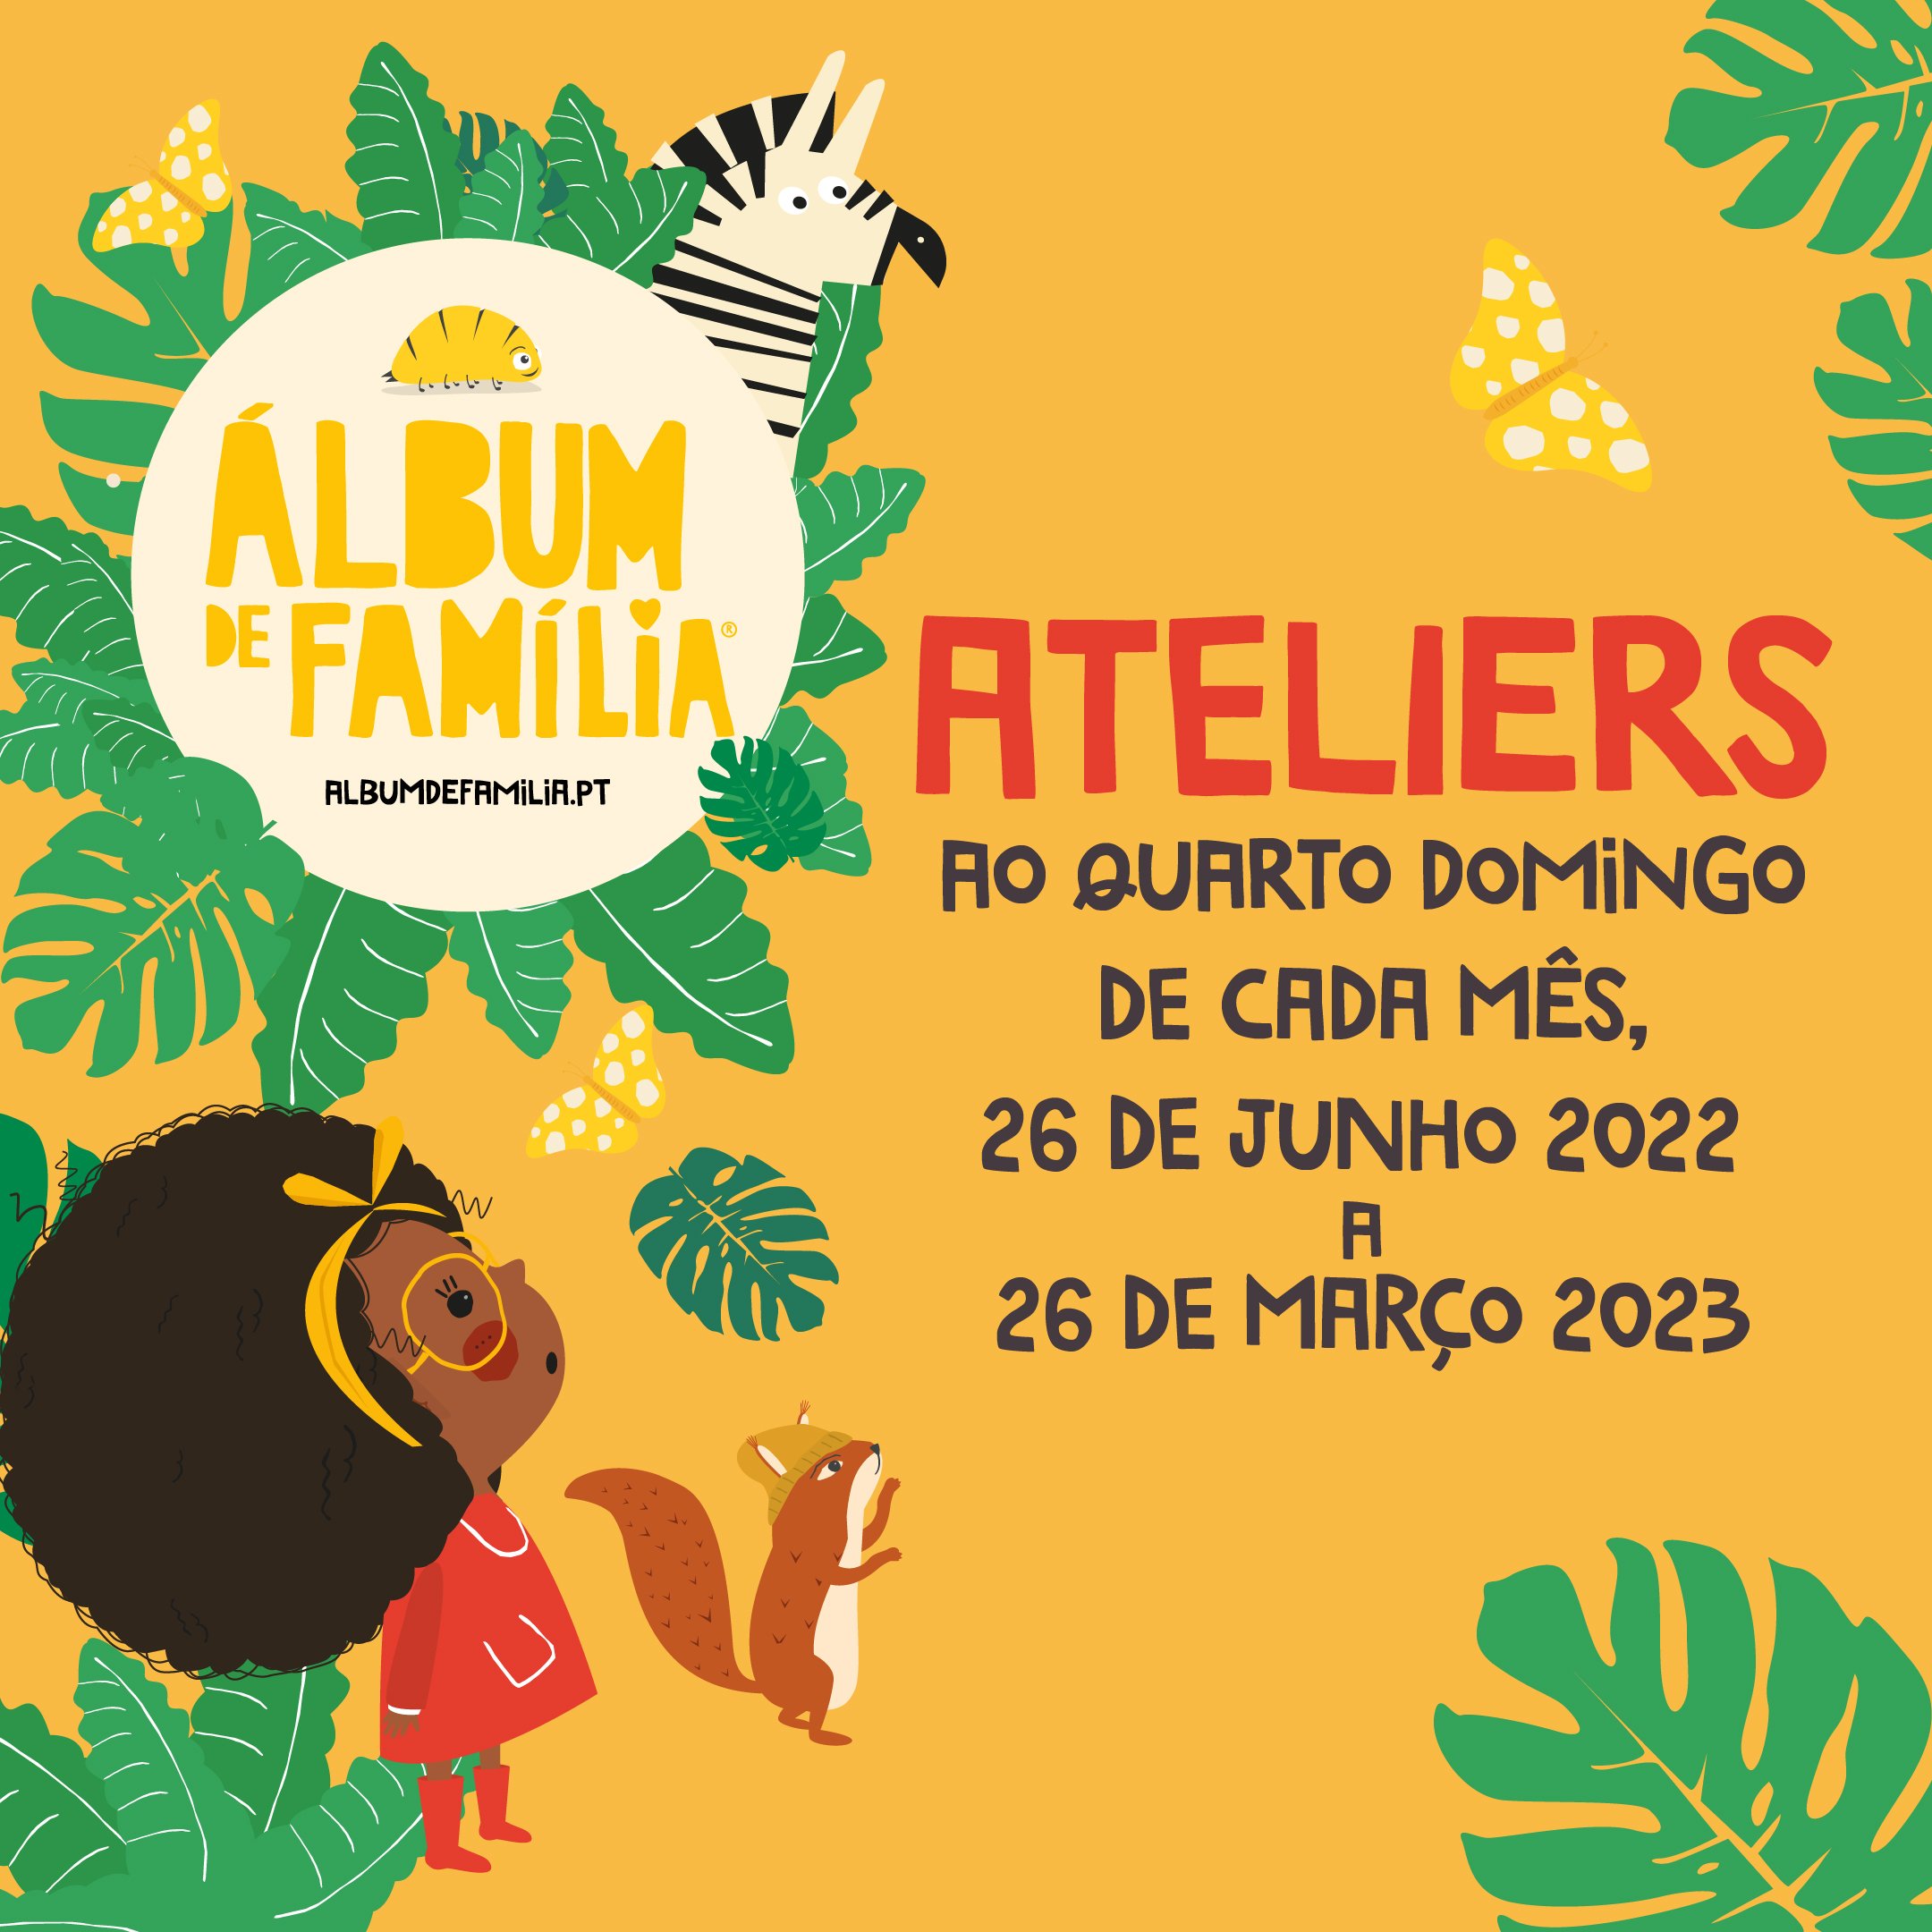 ÁLBUM DE FAMÍLIA - A tua série favorita no RioSul Shopping 